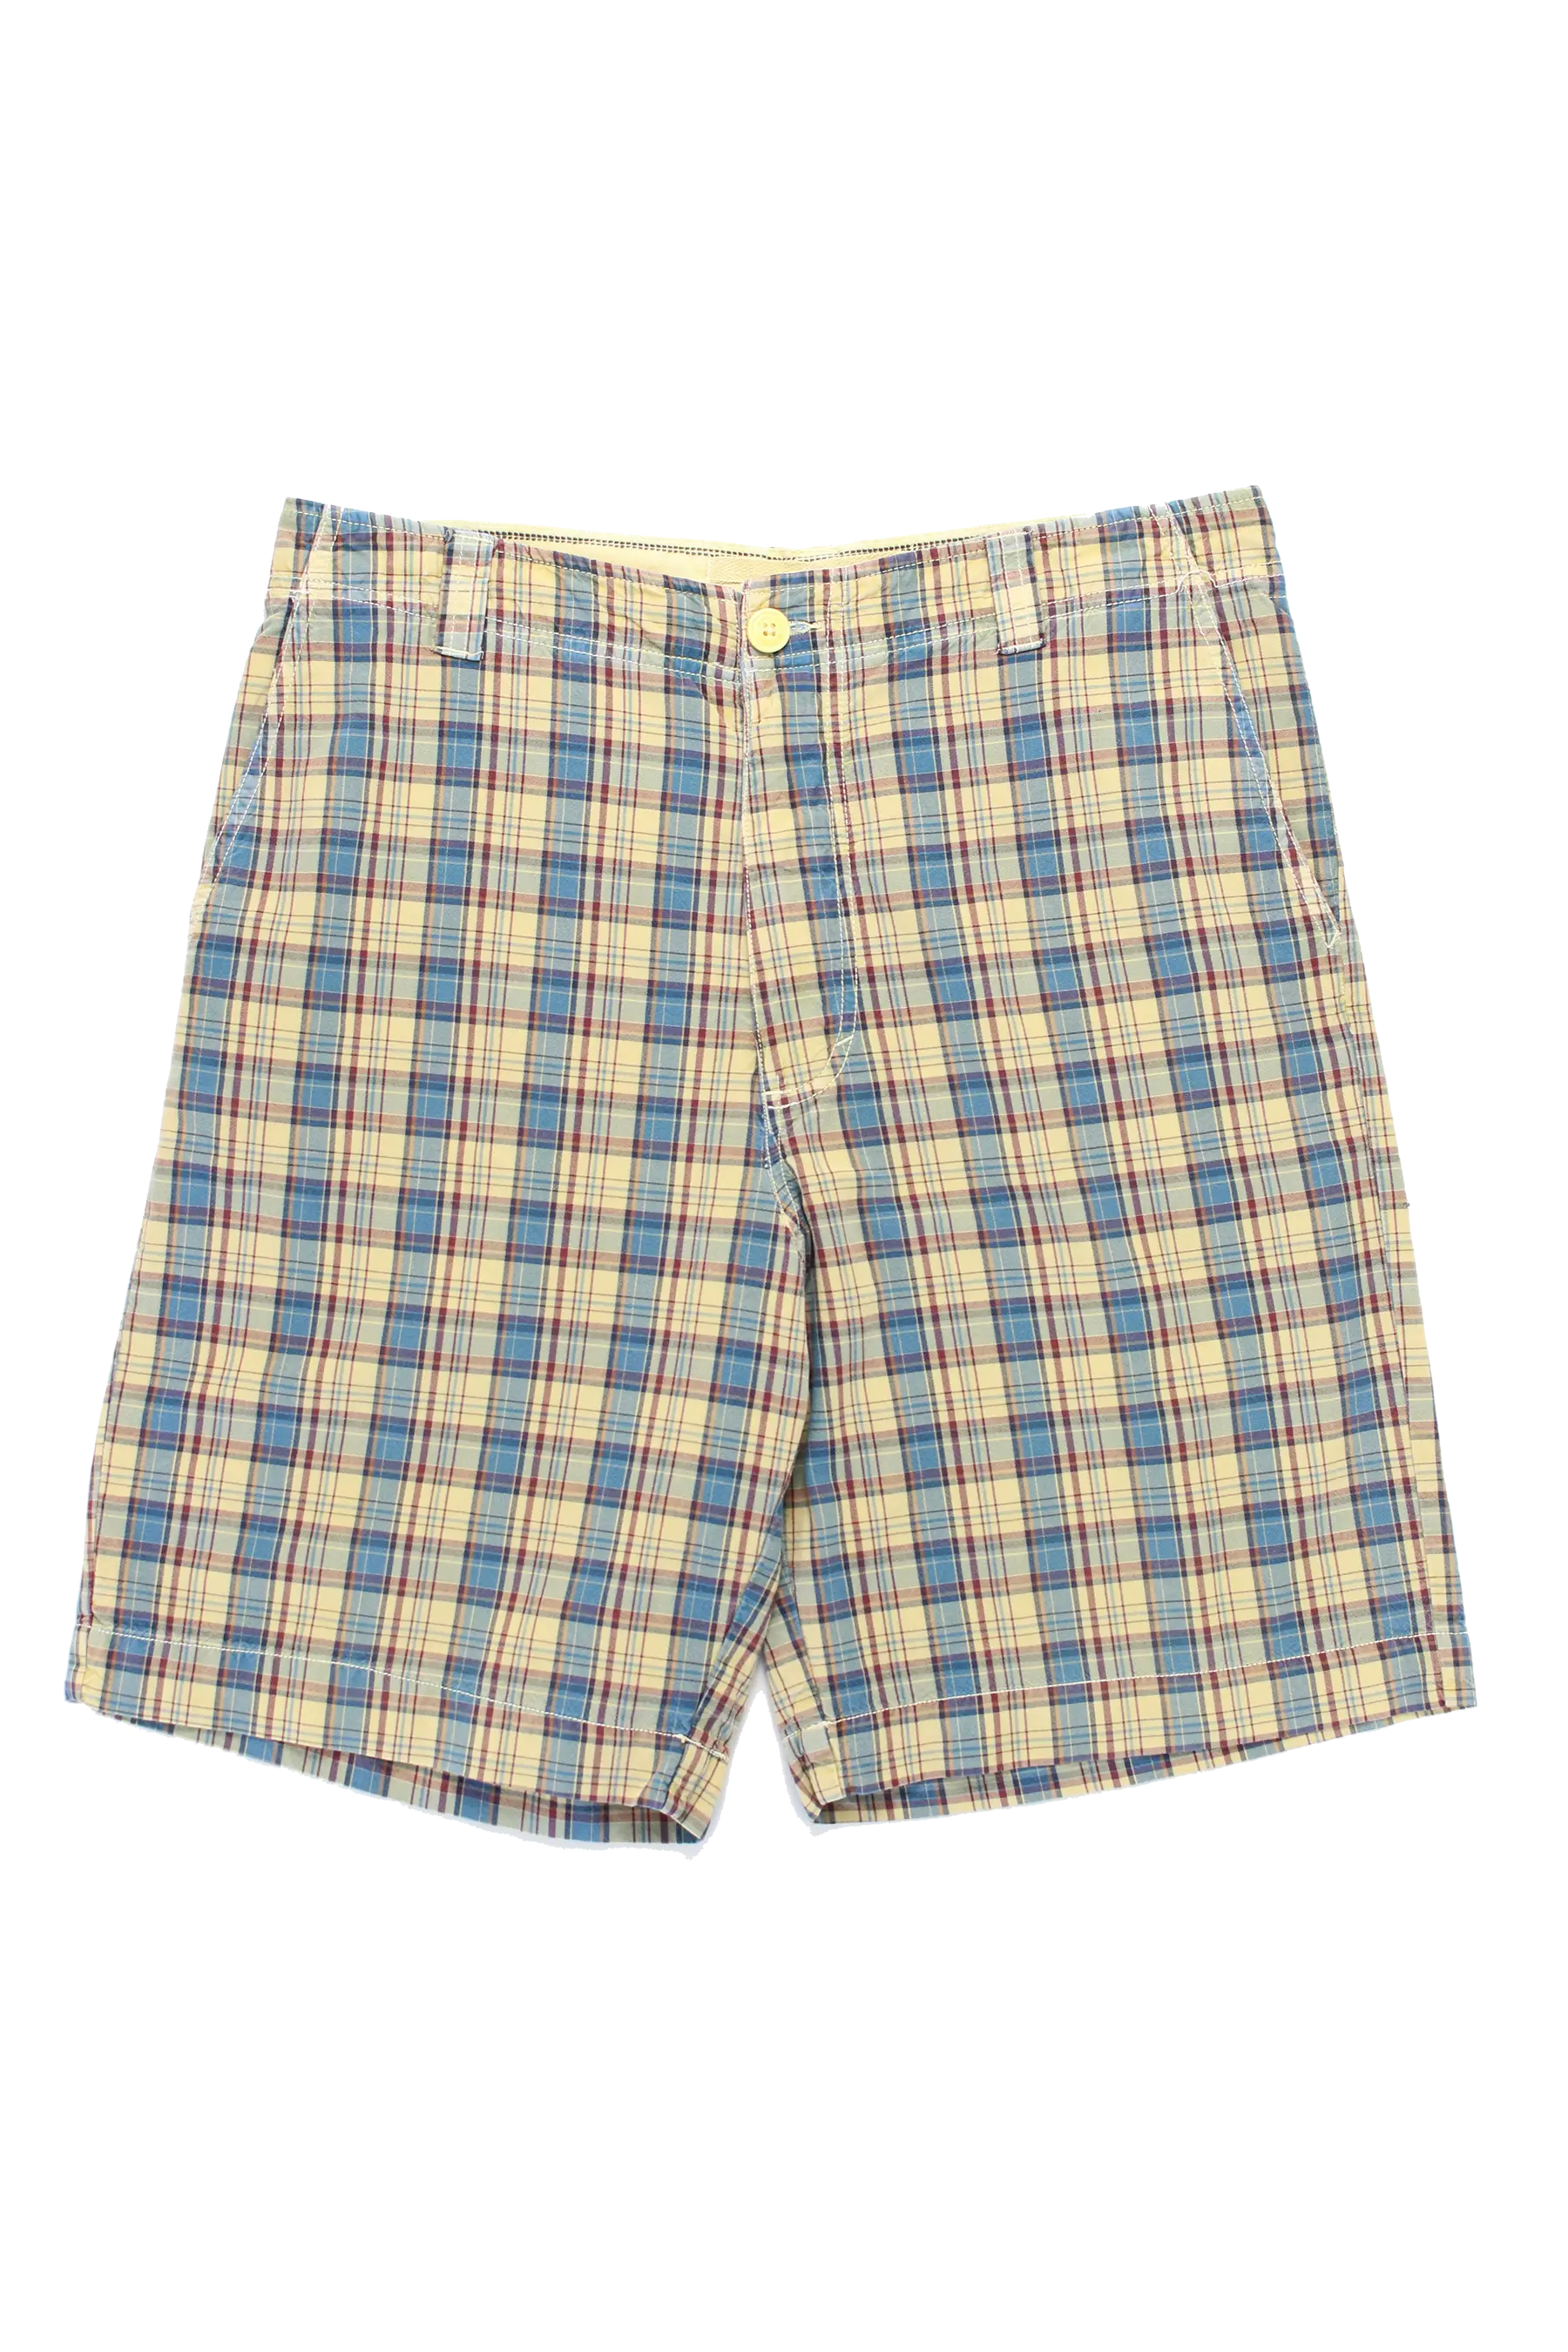 Woolrich Checkered Shorts